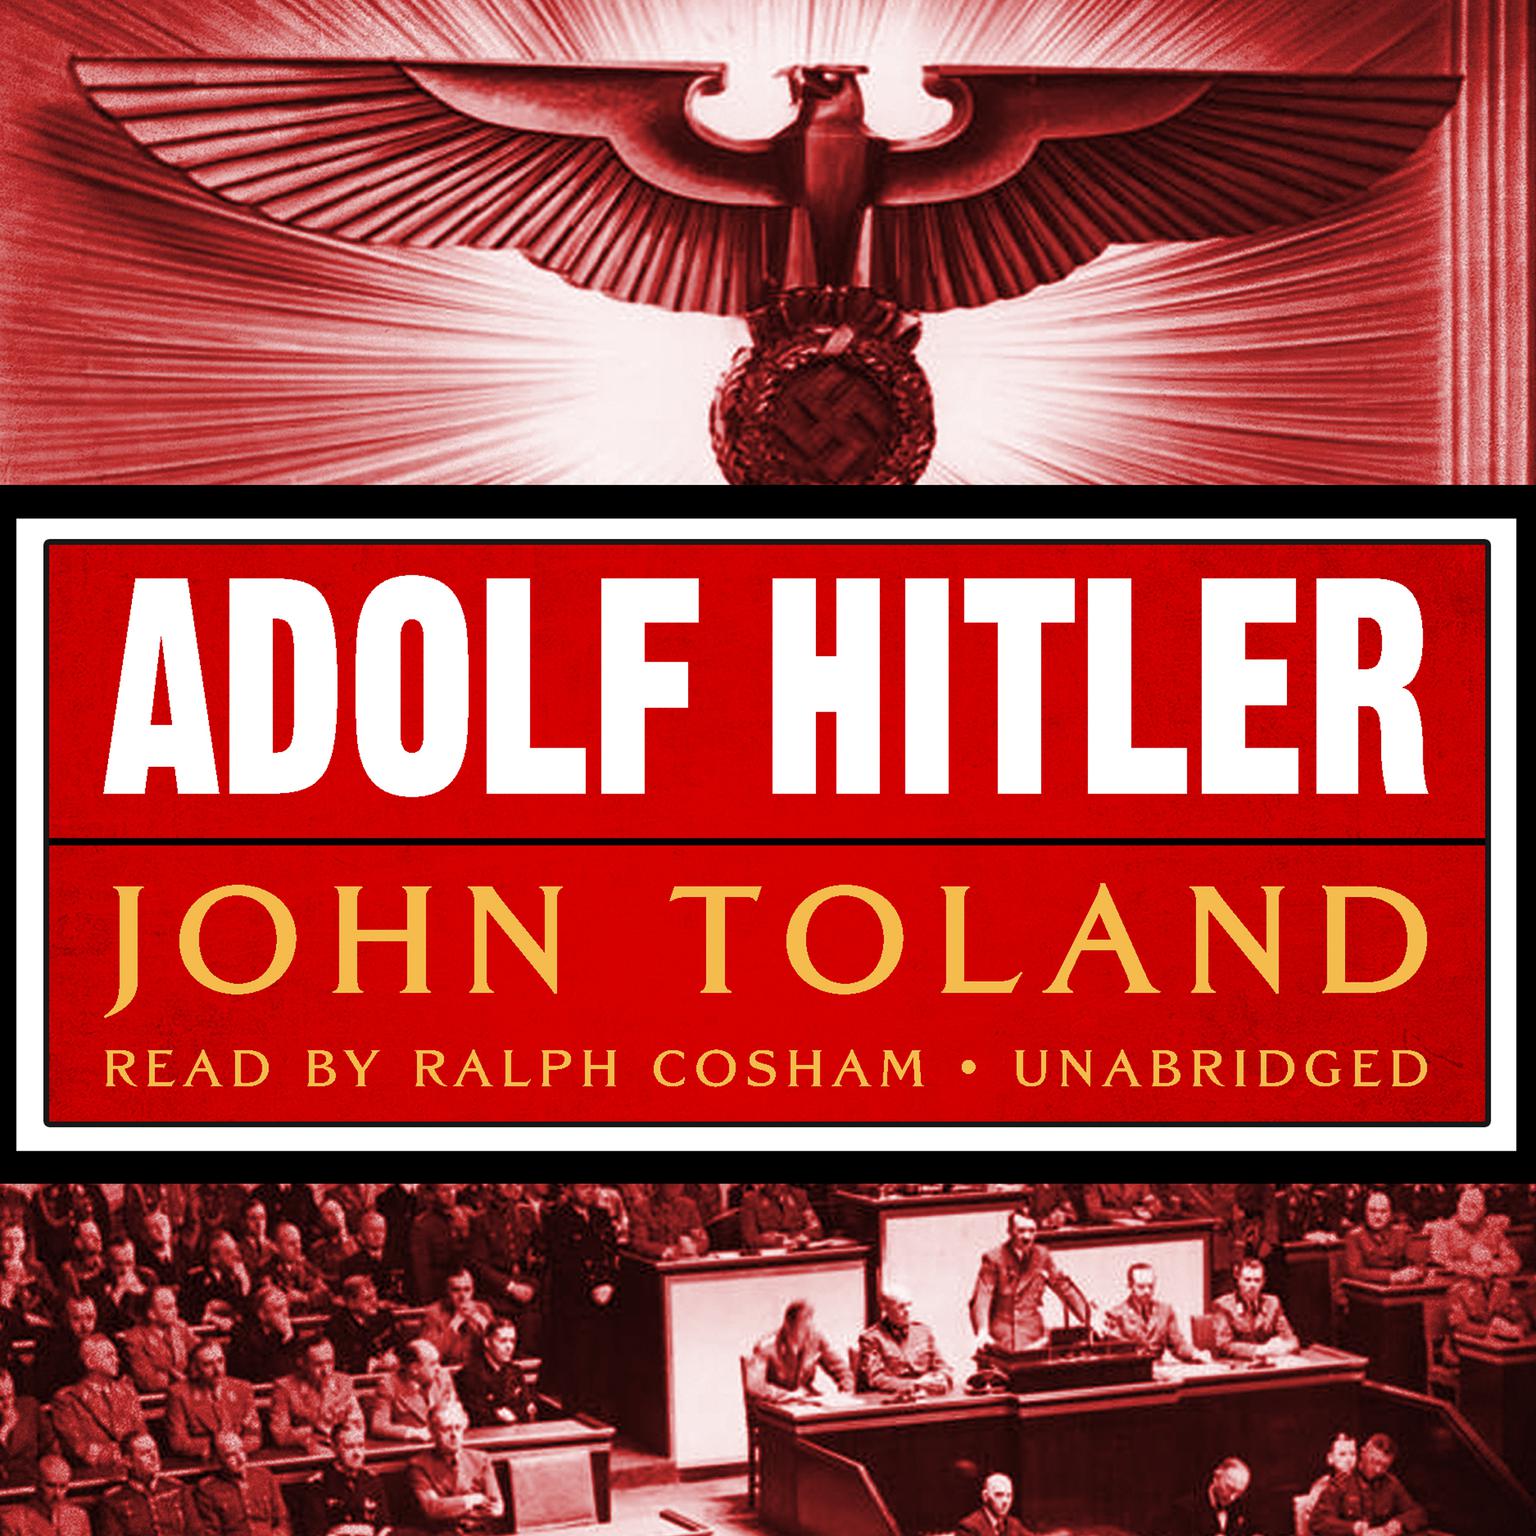 Adolf Hitler Audiobook, by John Toland